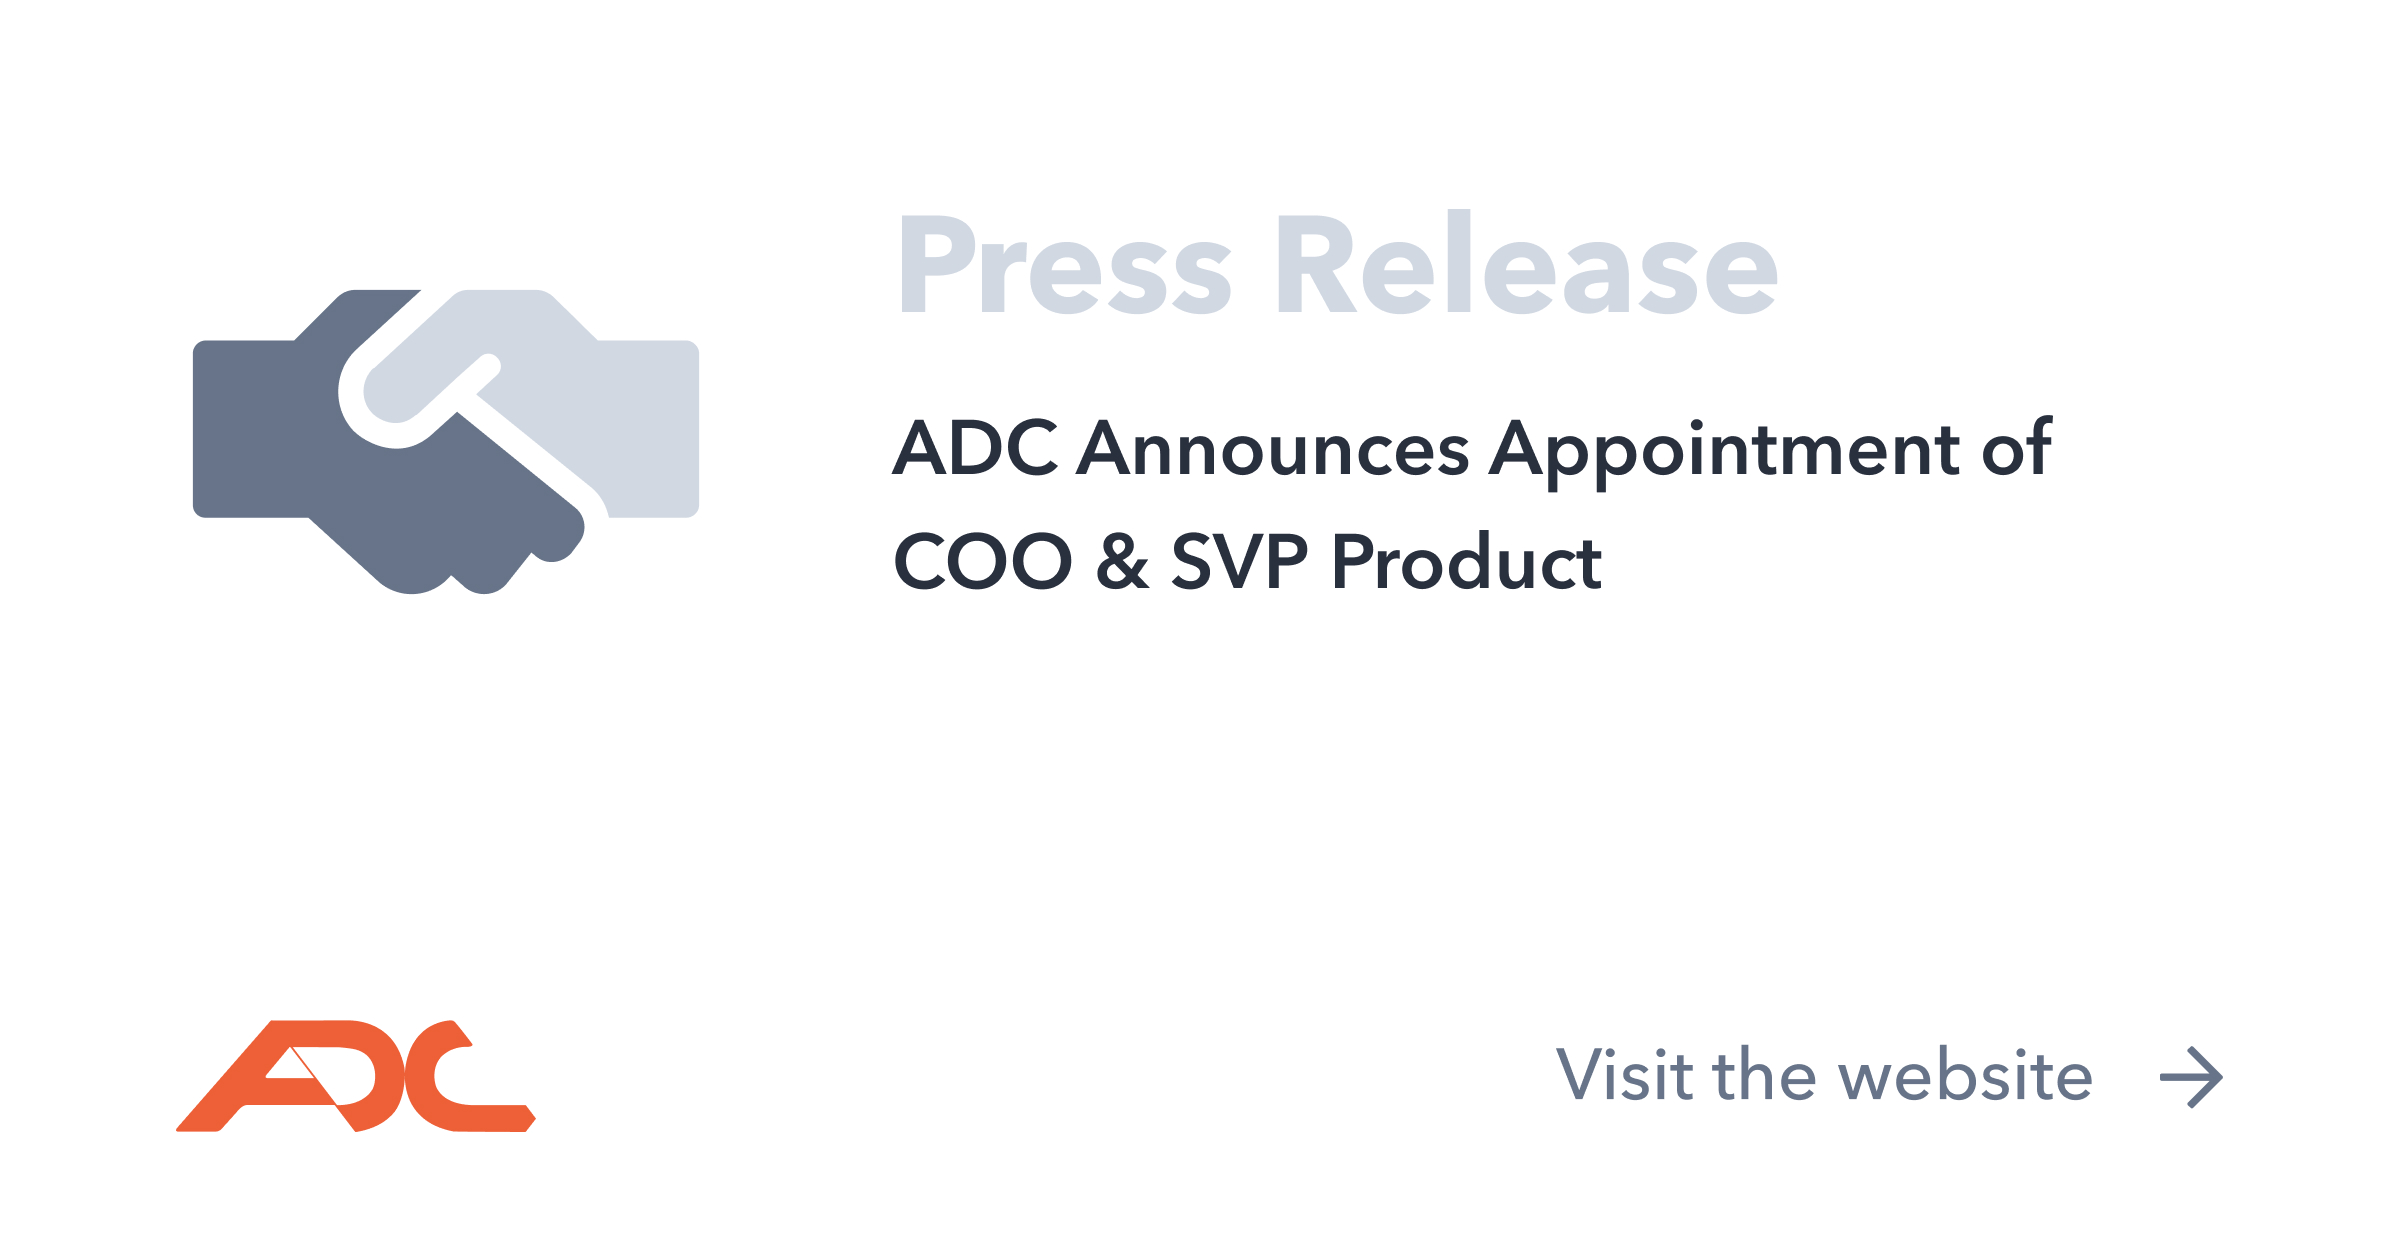 Steve Paro Announced as ADC COO